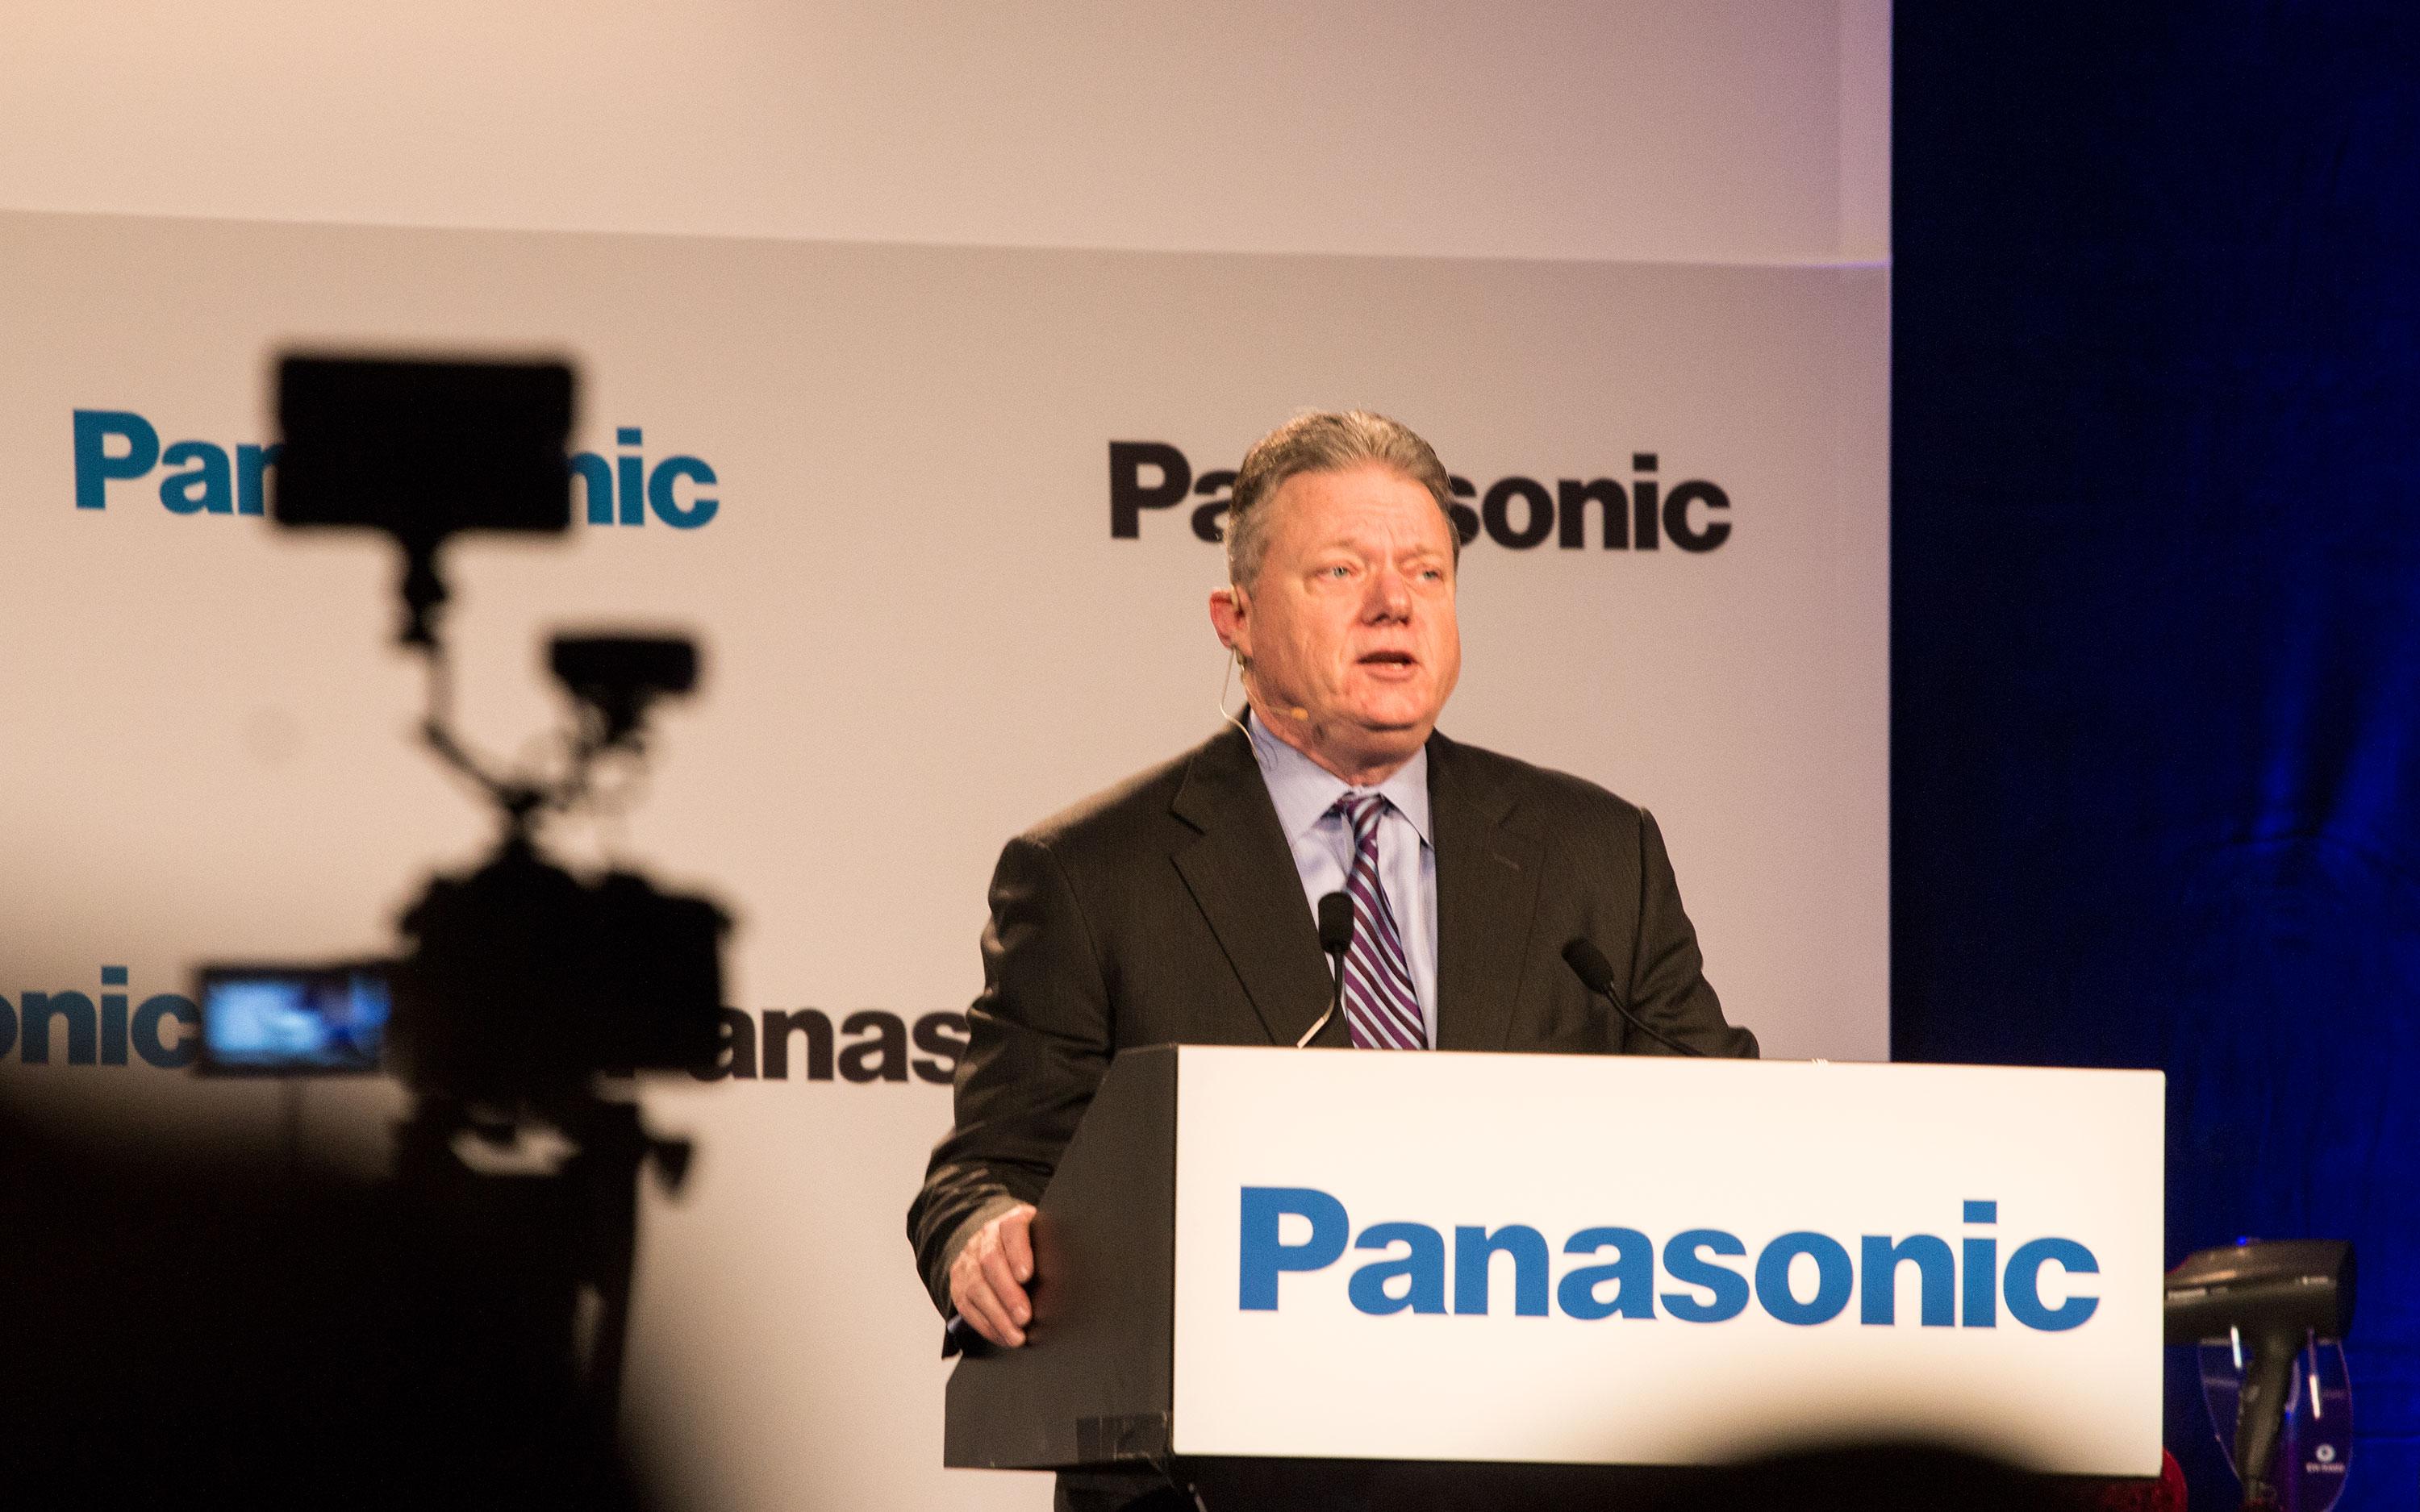 Joseph M. Taylor, Panasonics toppsjef i Nord-Amerika, på talerstolen under selskapets pressekonferanse.Foto: Varg Aamo, Hardware.no